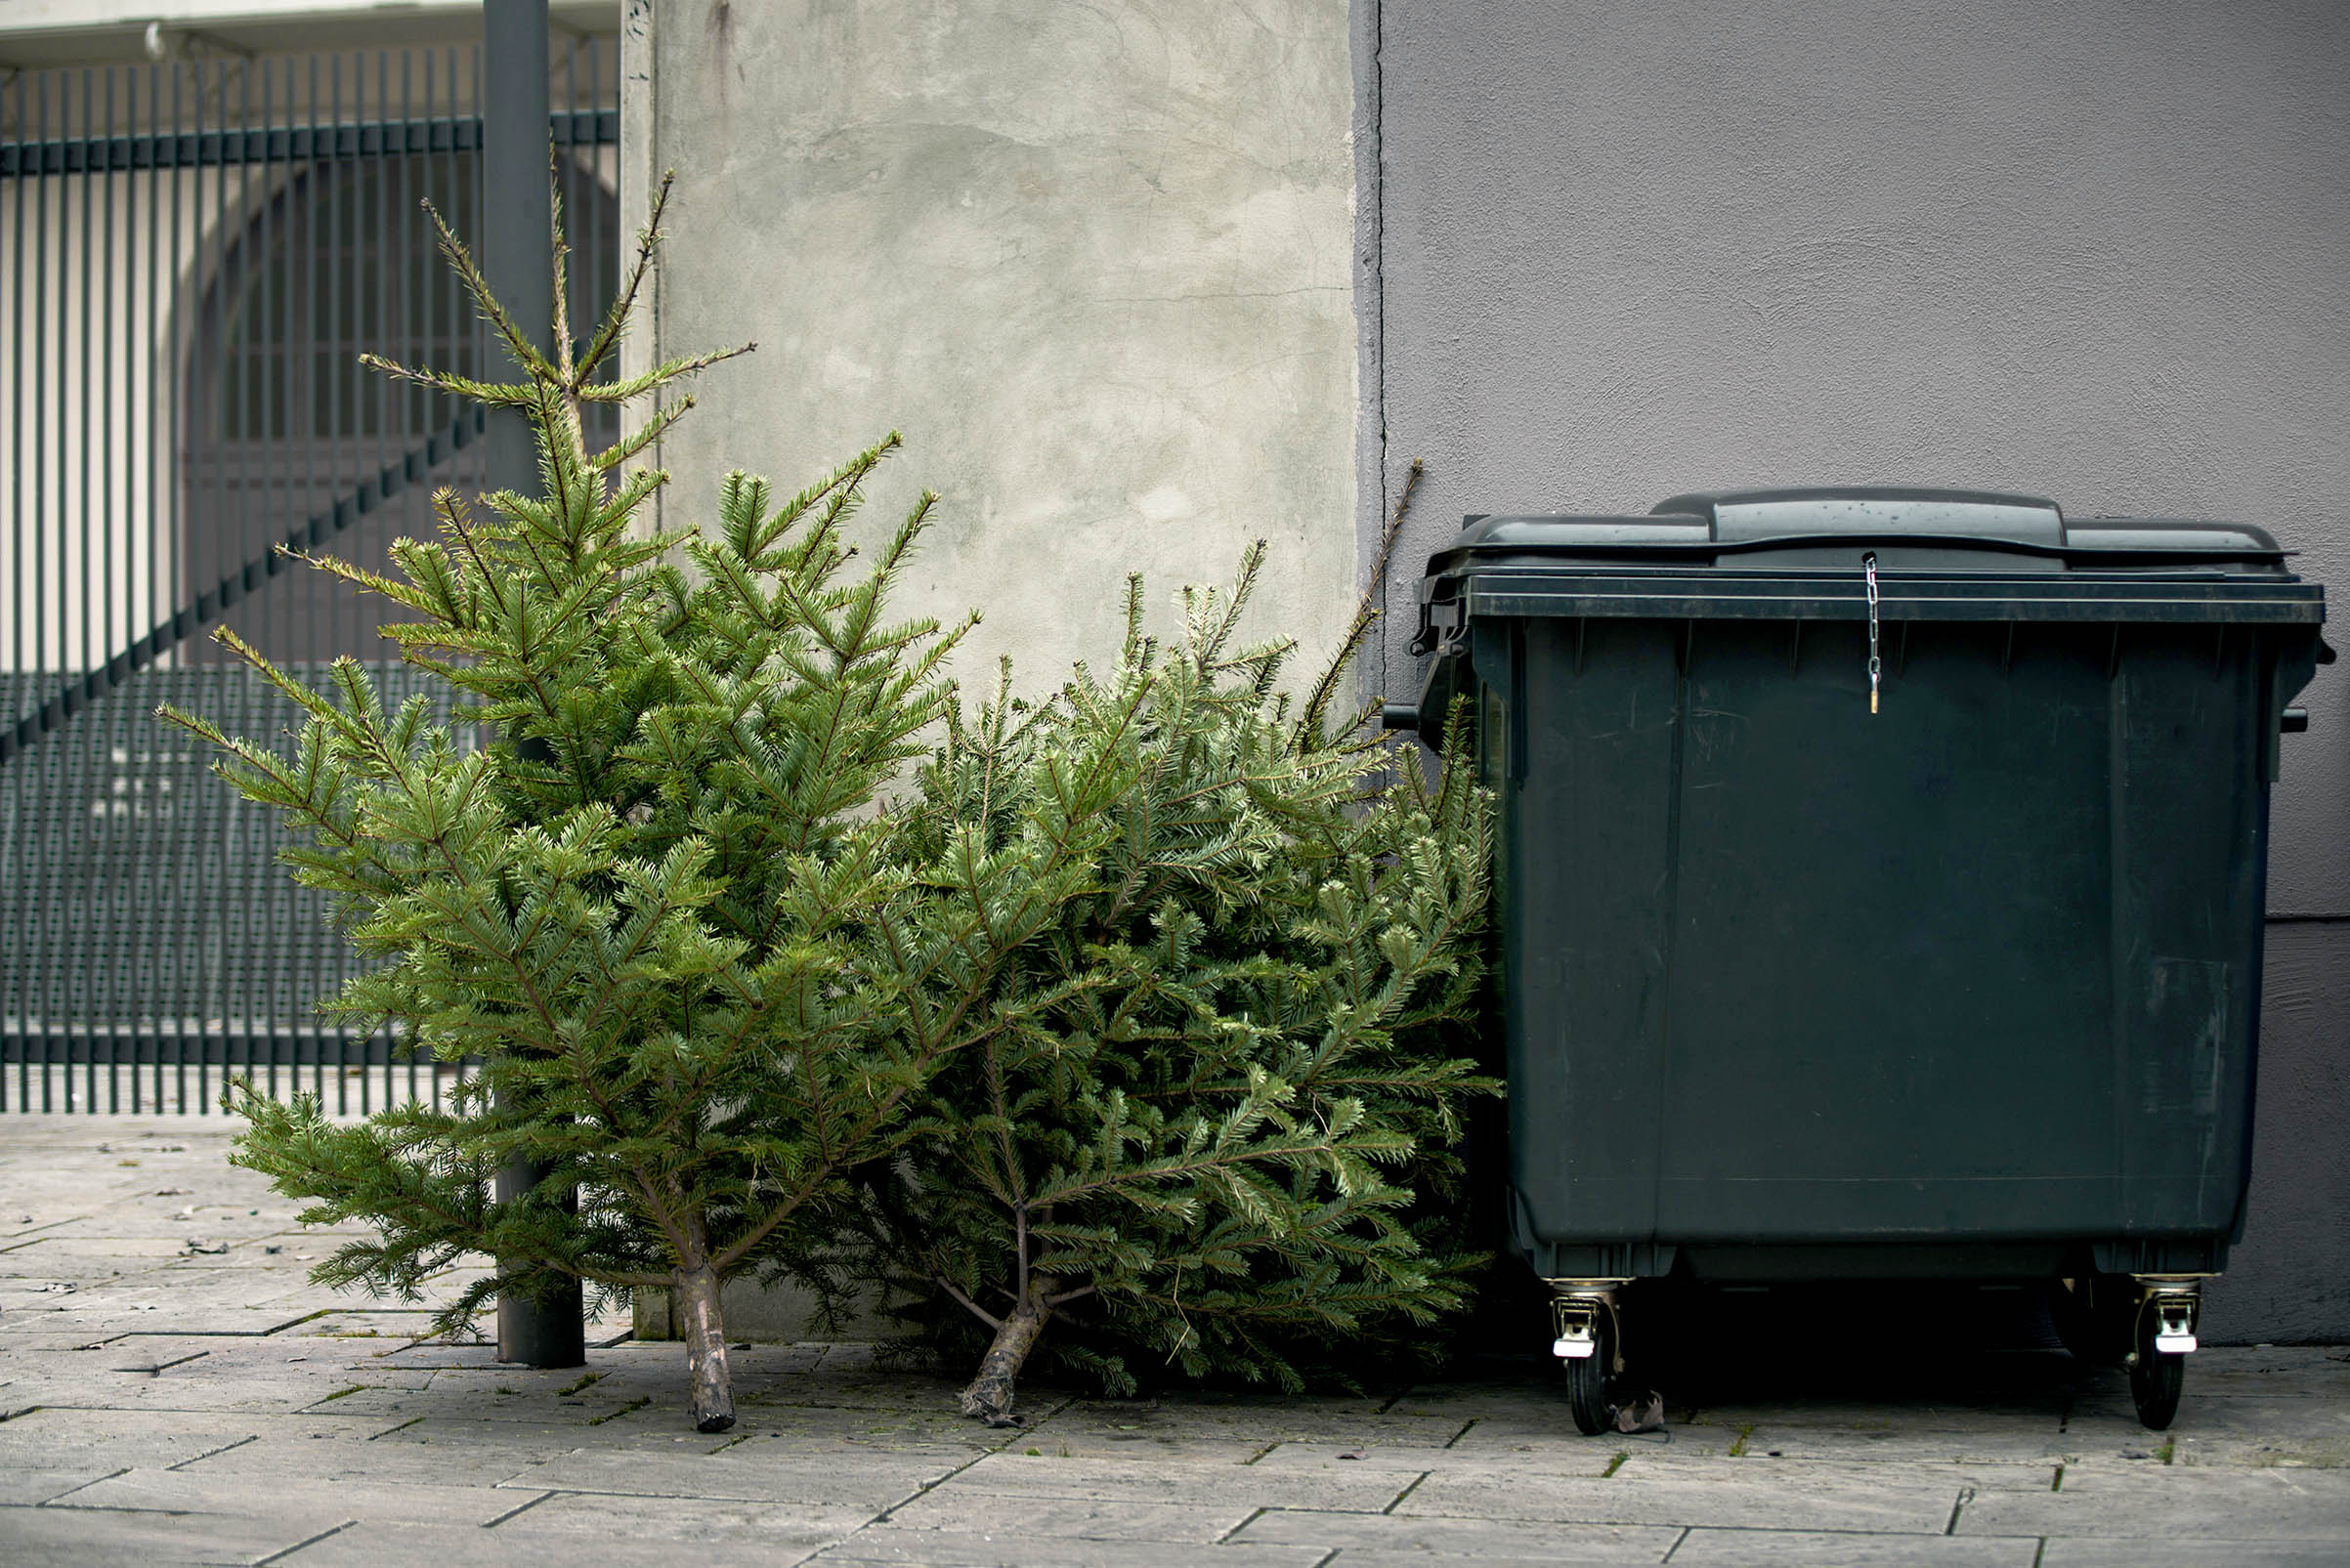 Haskins Garden Centres encourage locals to recycle their Christmas tree – Haskins Garden Centres